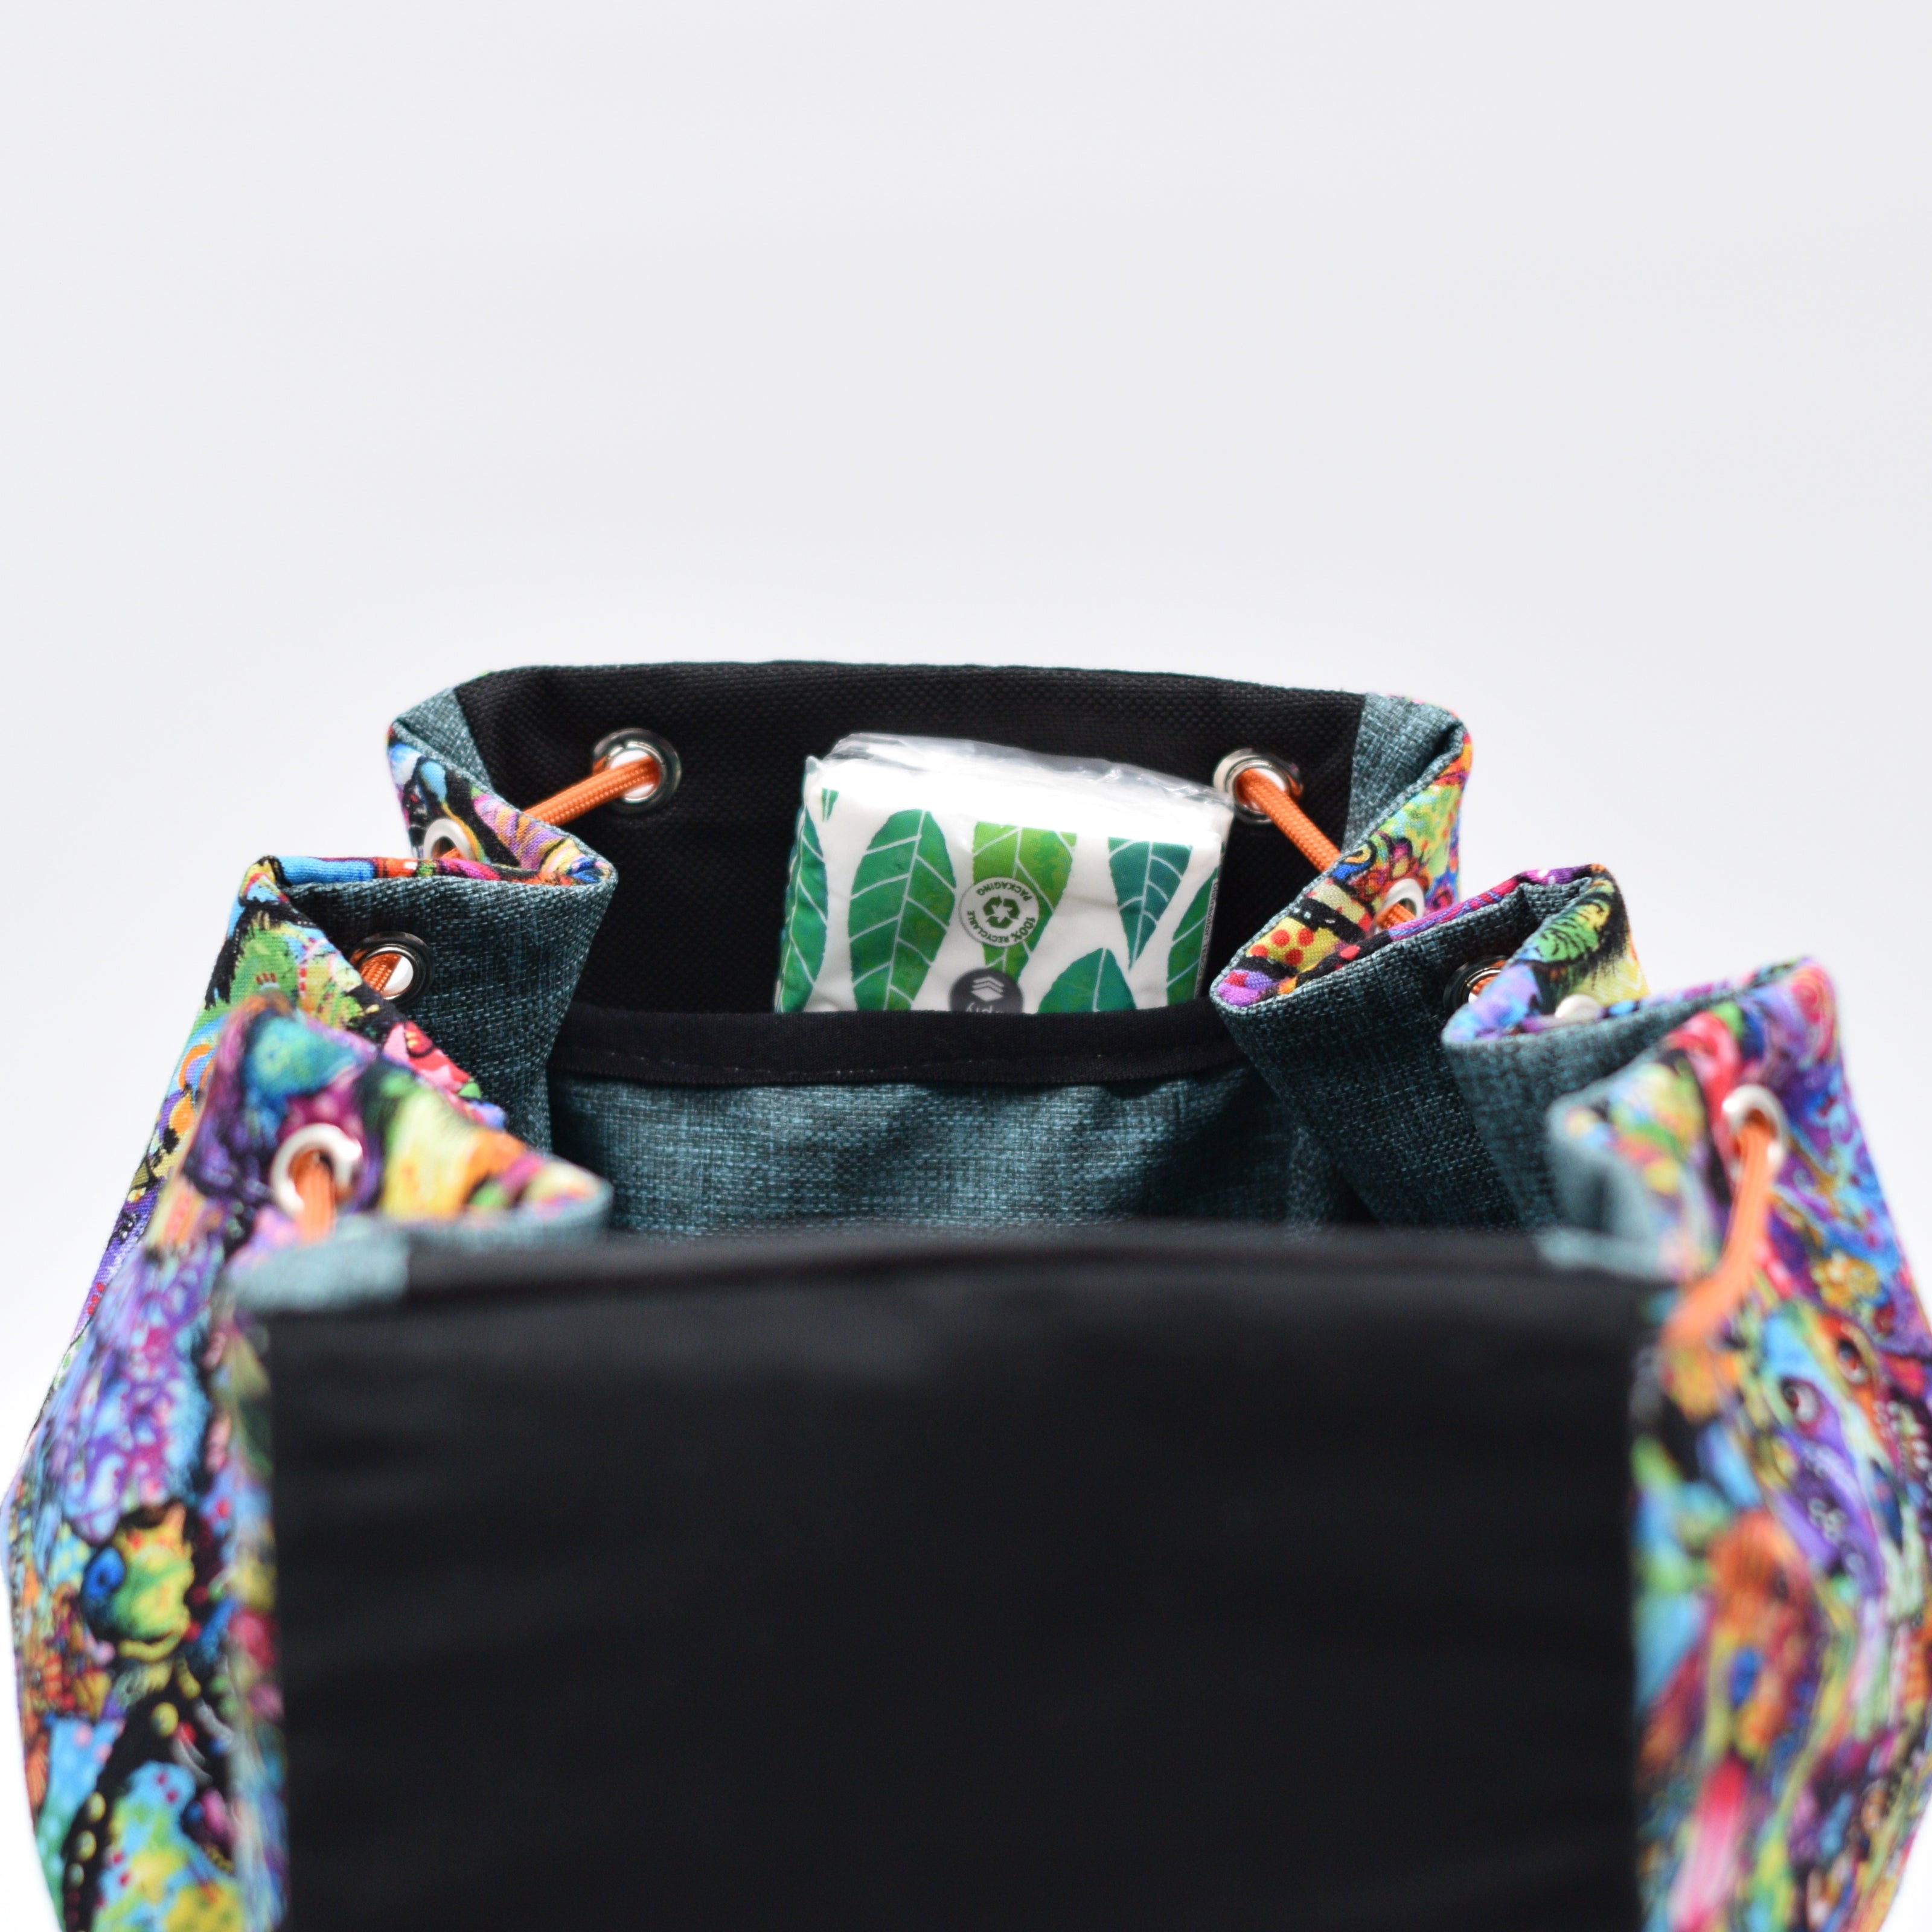 Damiselle handmade colorful backpack